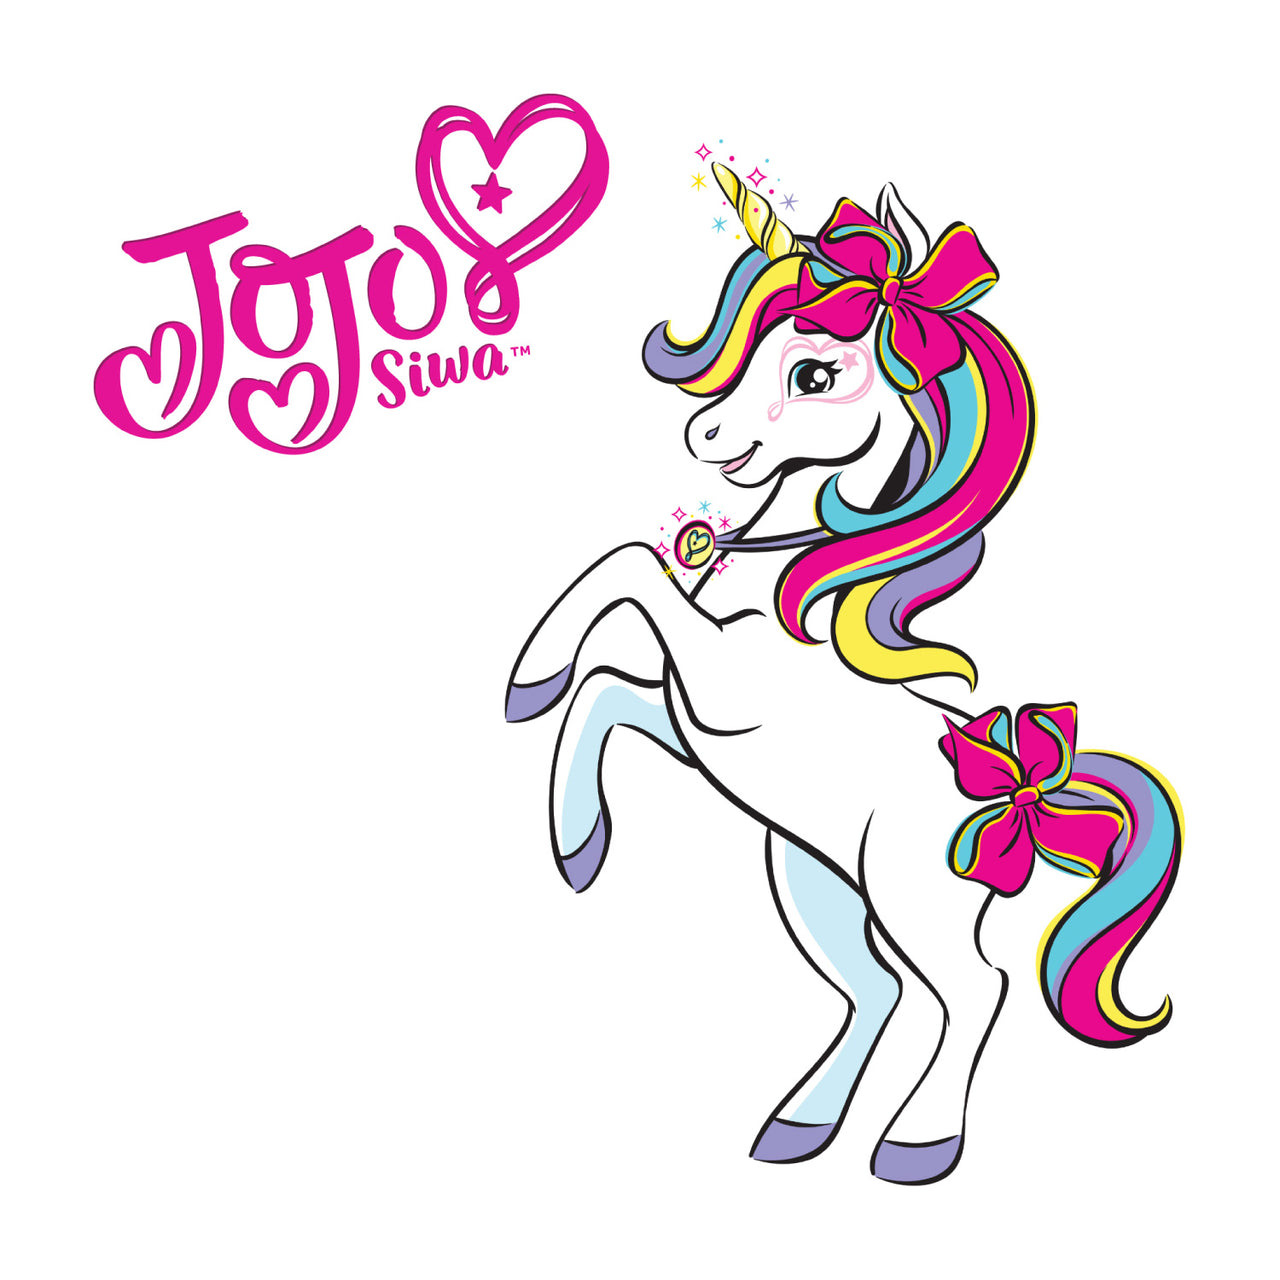 Jojo Pose Stickers for Sale